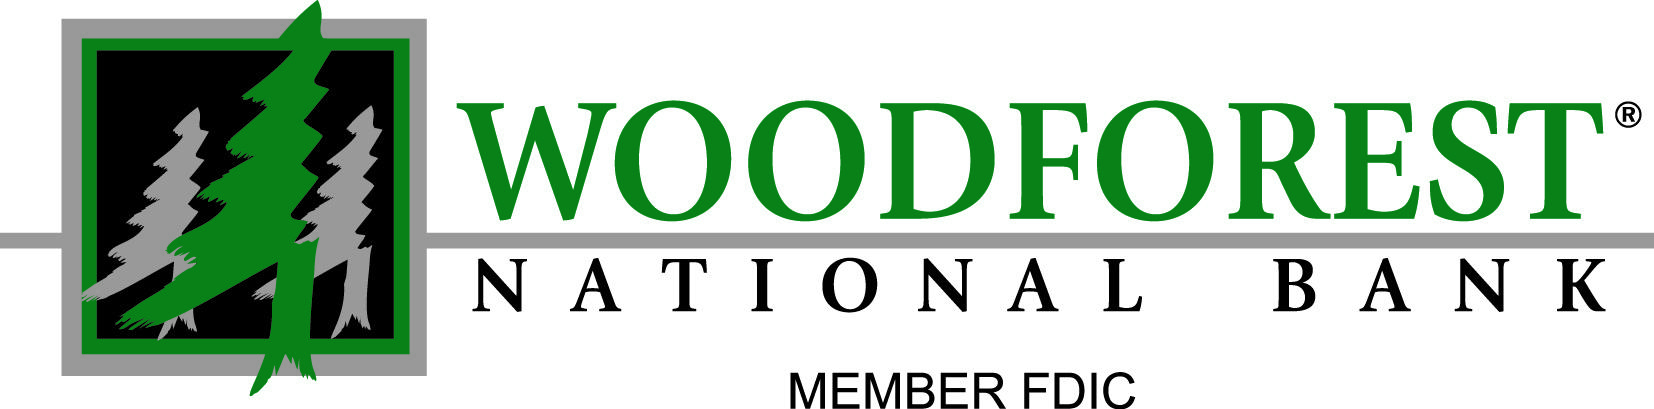 Woodforest Logo - Woodforest & LiftFund Referral Form - LiftFund